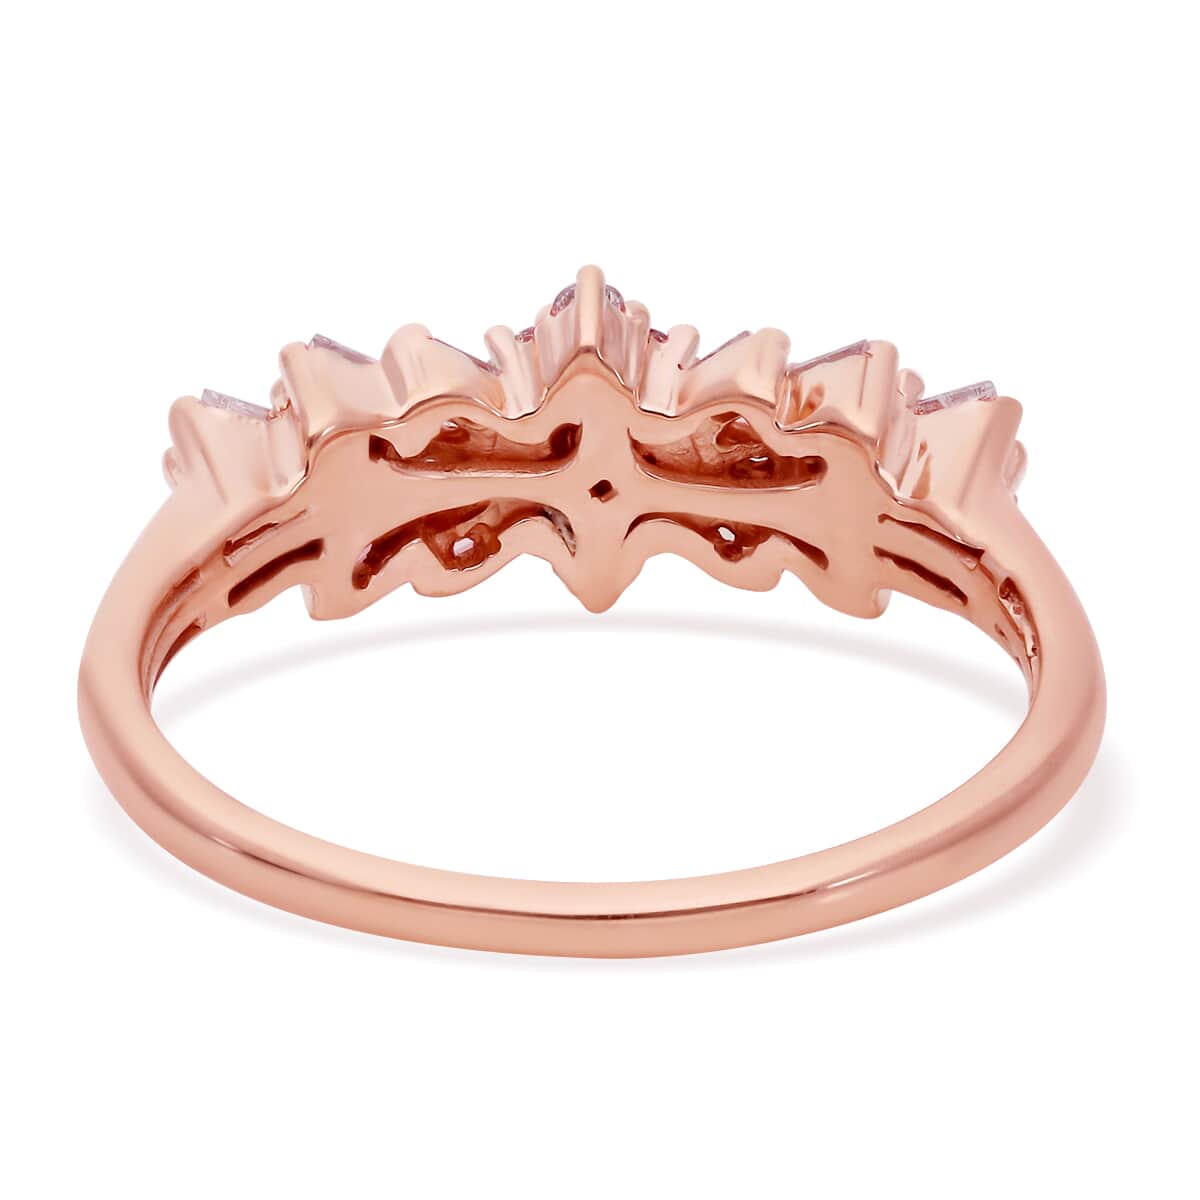 LUXORO 10K Rose Gold Natural Pink Diamond I3 Ring (Size 10.0) 3 Grams 0.50 ctw image number 4